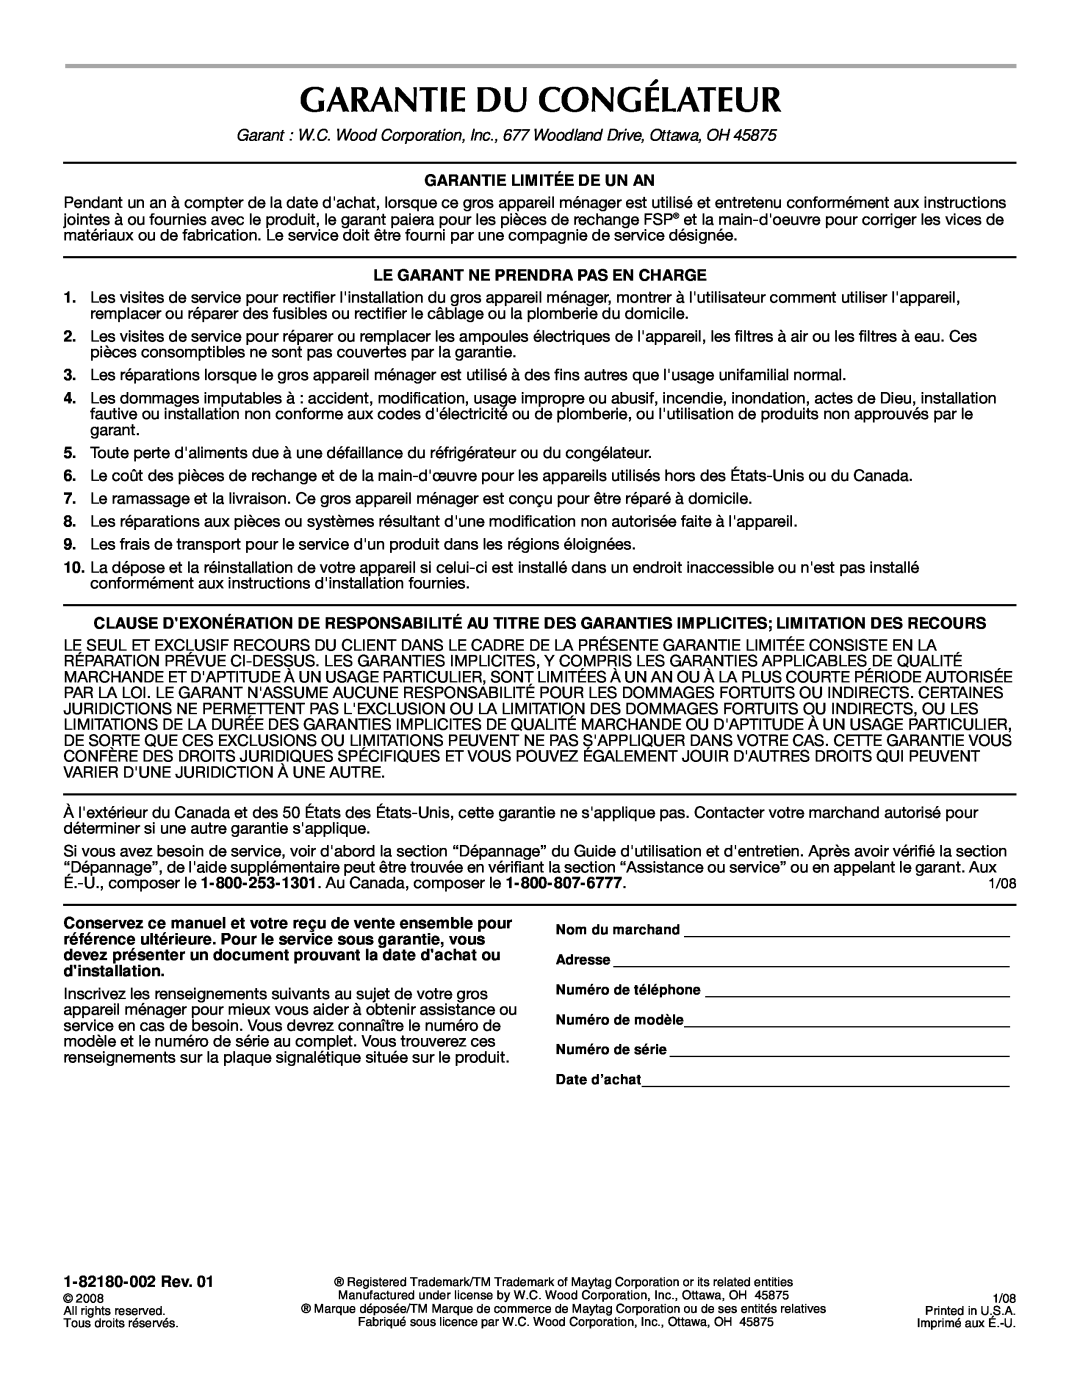 Maytag 1-82180-002 manual Garantie Du Congélateur, Garant W.C. Wood Corporation, Inc., 677 Woodland Drive, Ottawa, OH 